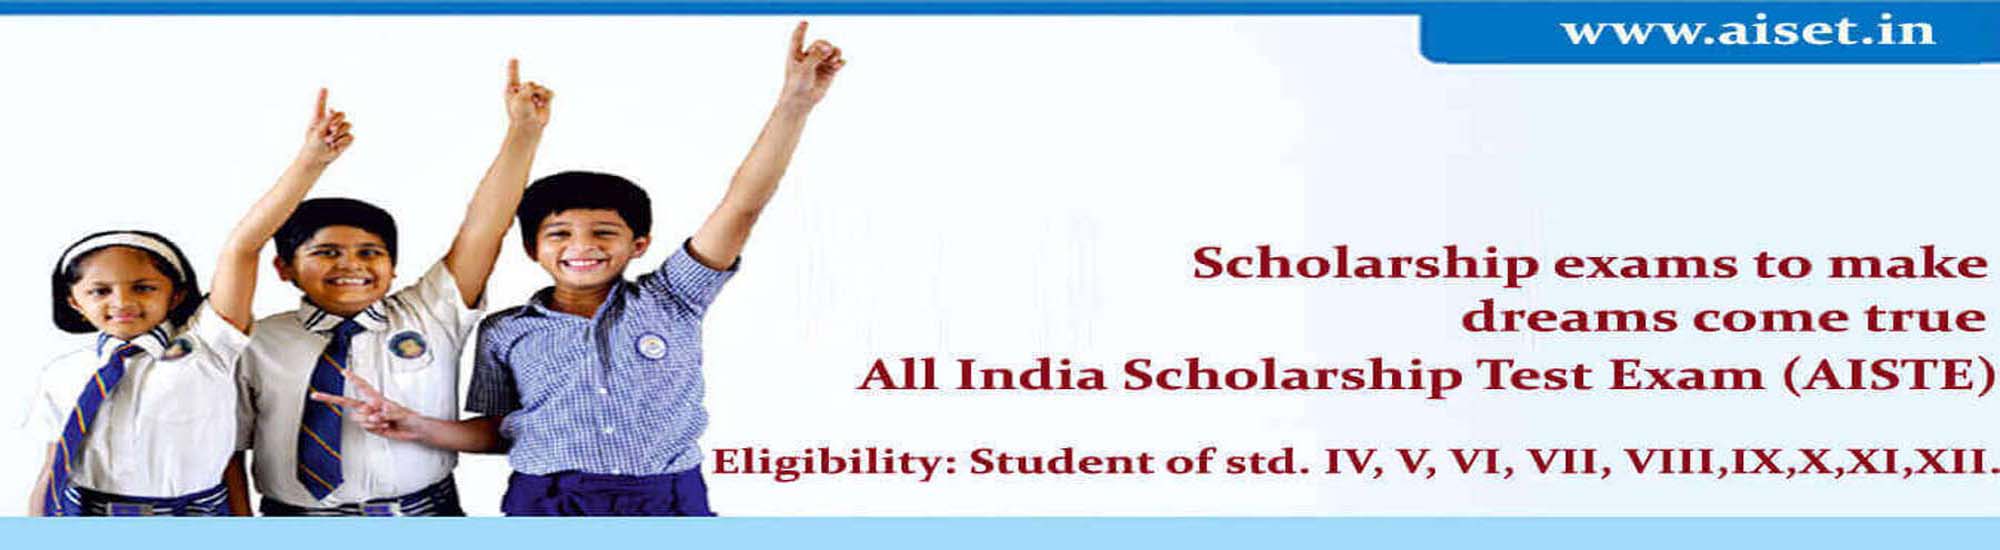 Bihar scholarship portal